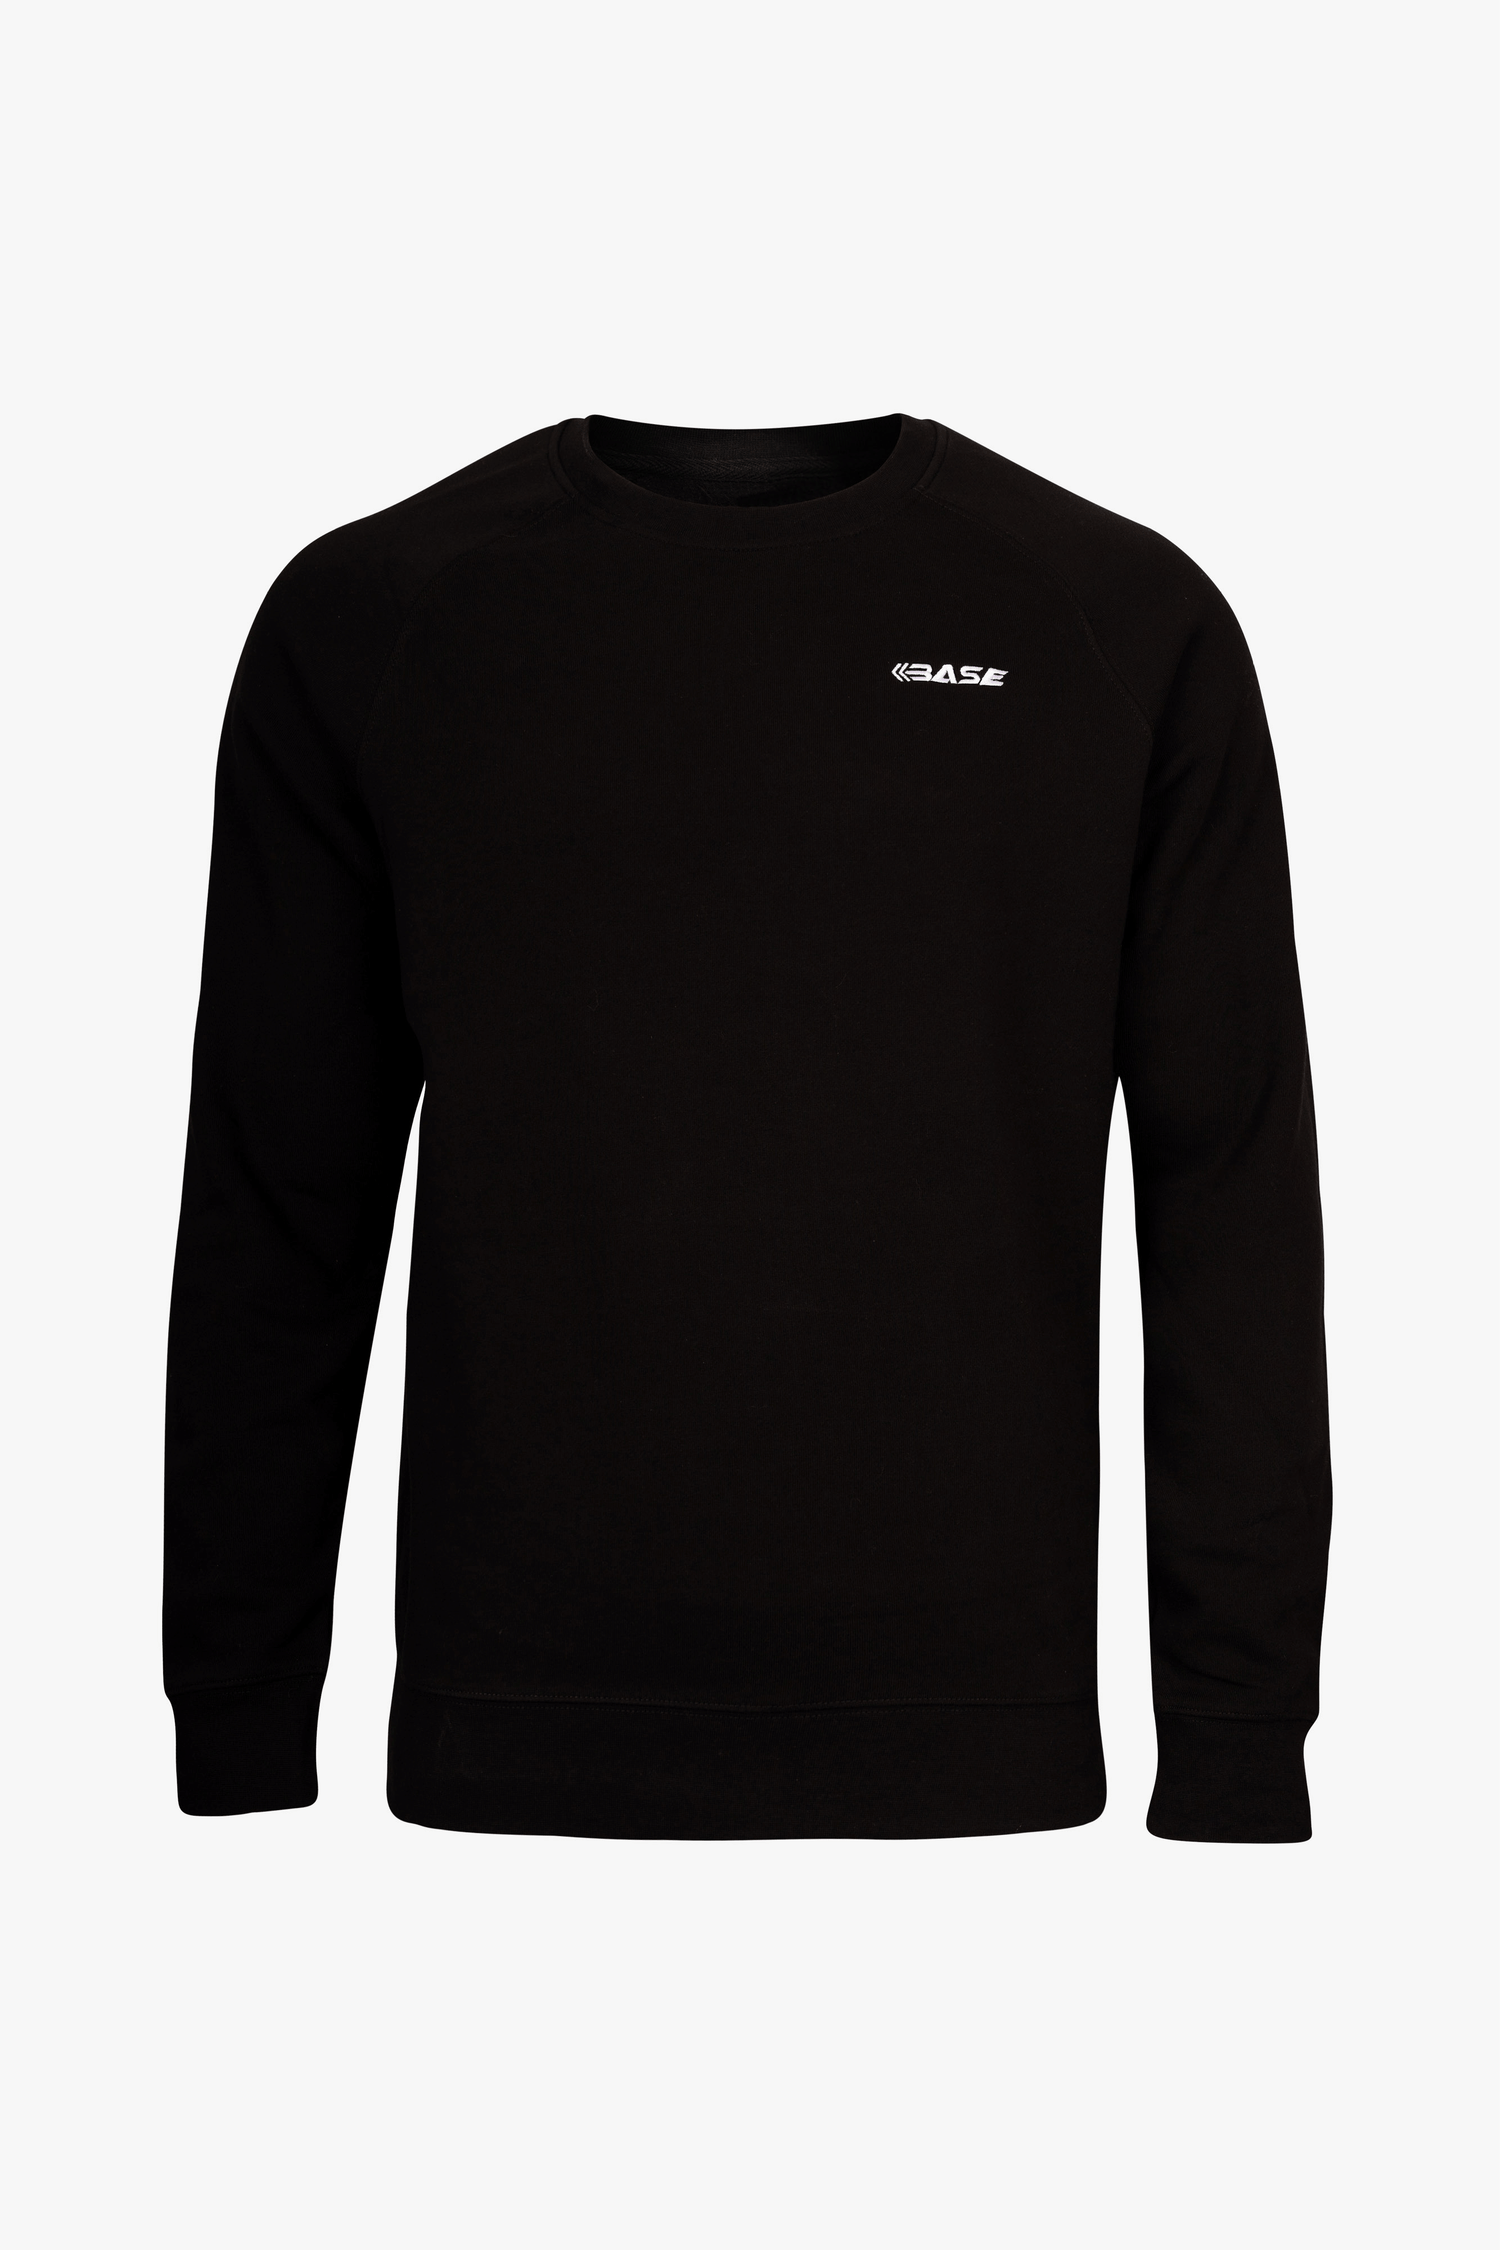 BASE Unisex Crew Neck Sweater - Black